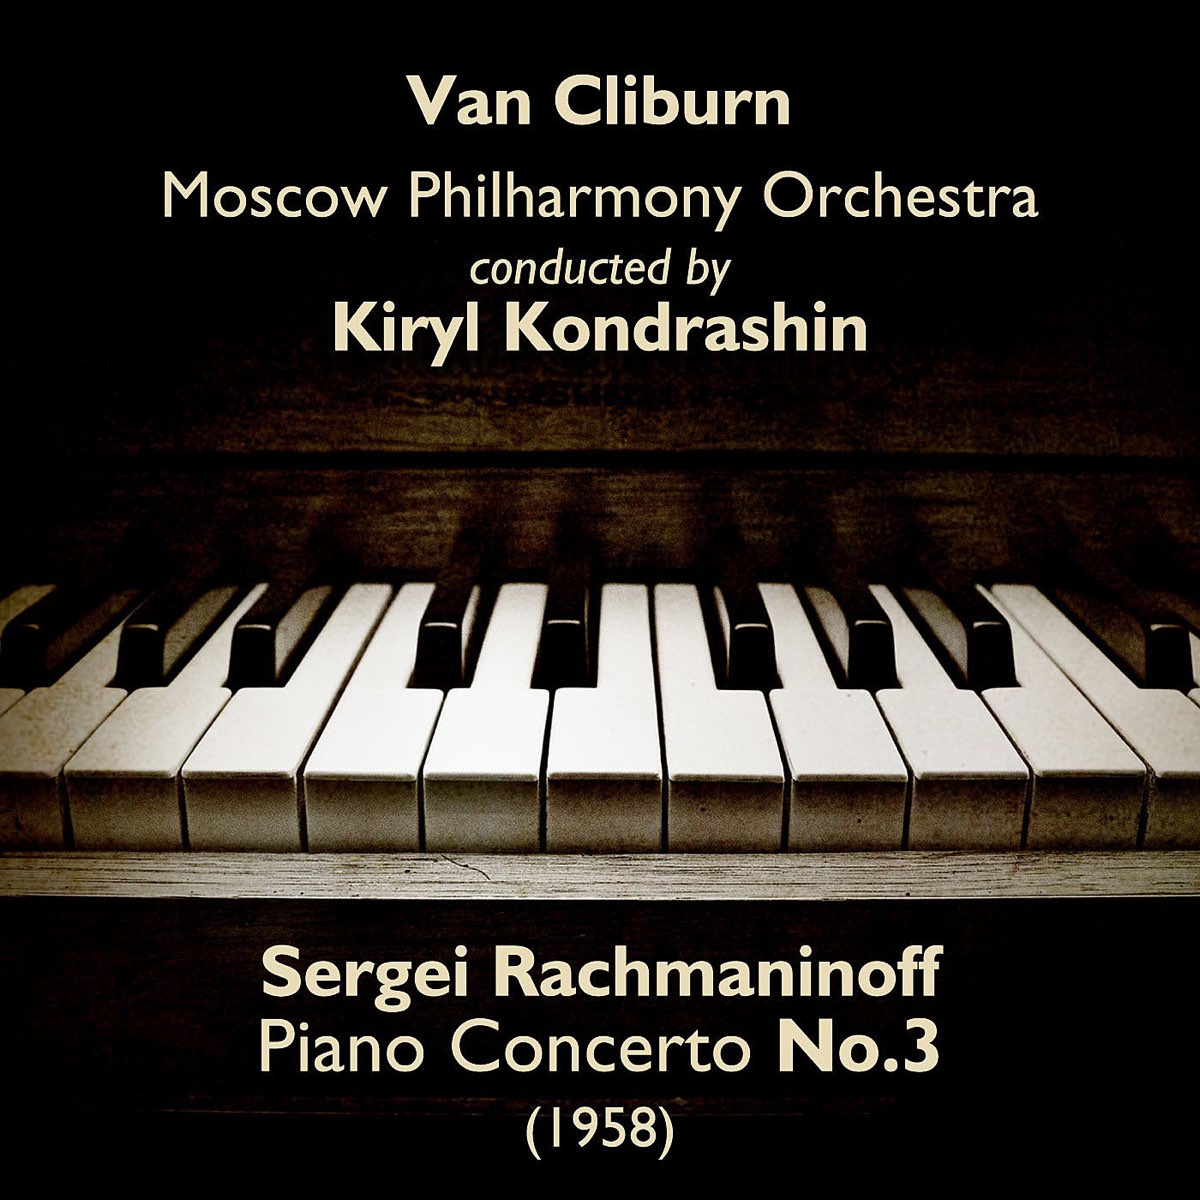 Sergei Rachmaninoff - Piano Concerto No.3 (1958) by Van Cliburn, Kirill  Kondrashin & Moscow Philharmonic Orchestra on Apple Music